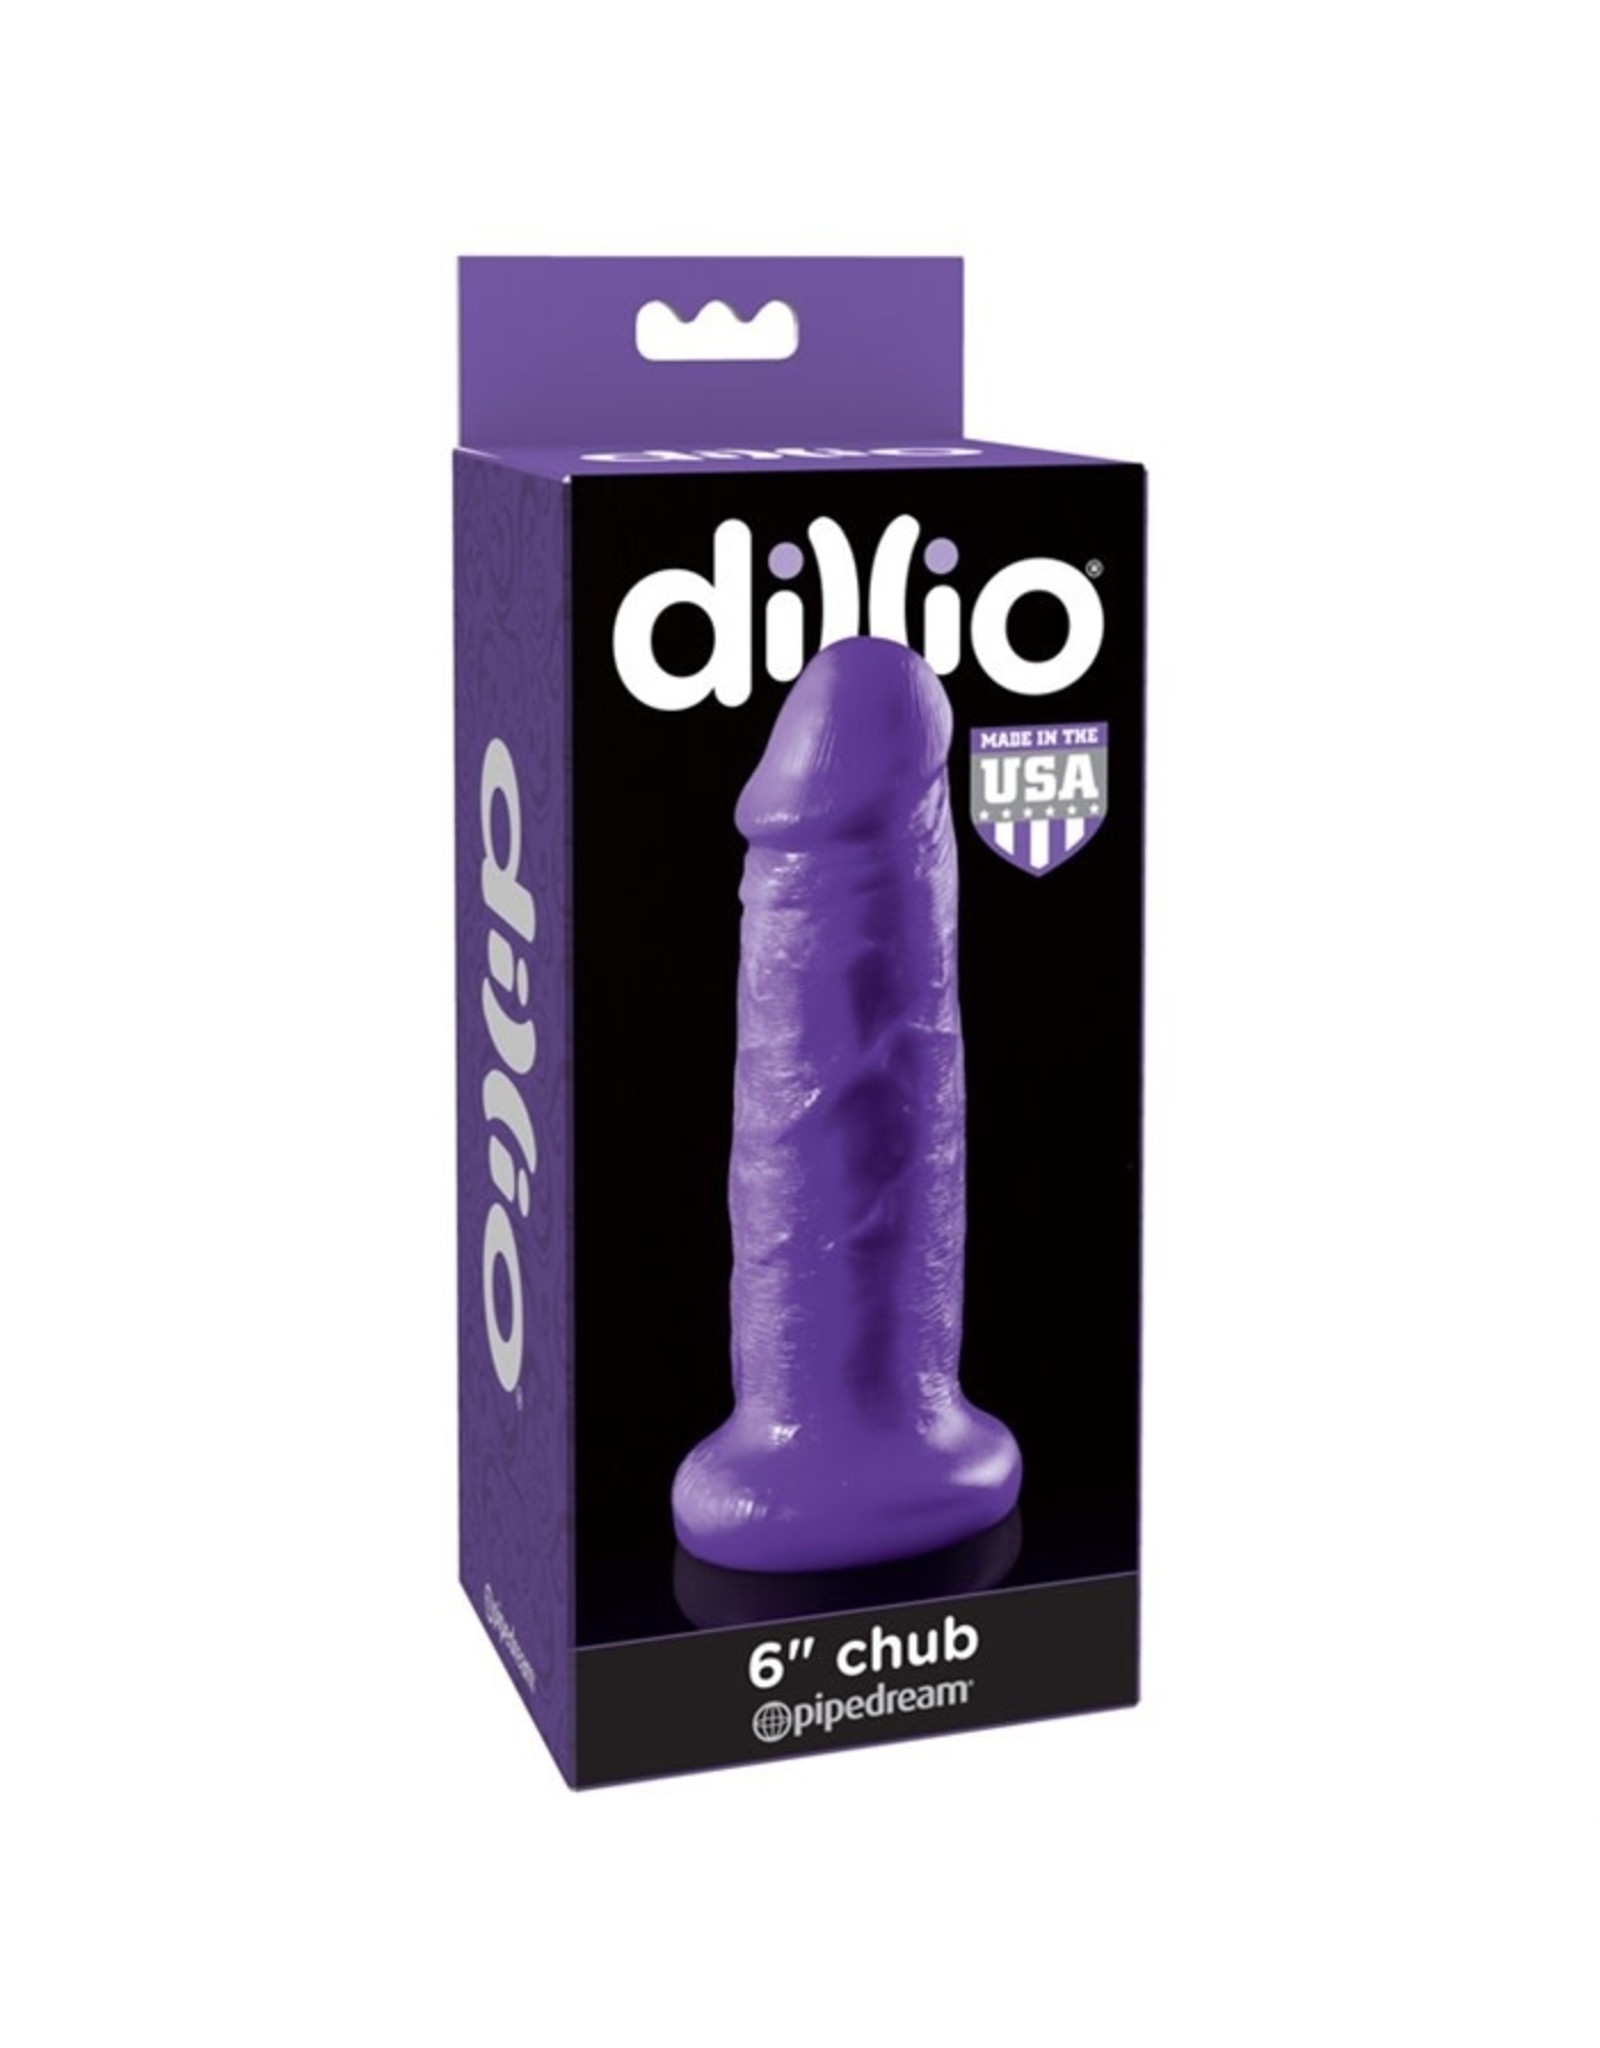 Pipedream Dillio - 6" Chub Dildo - Purple